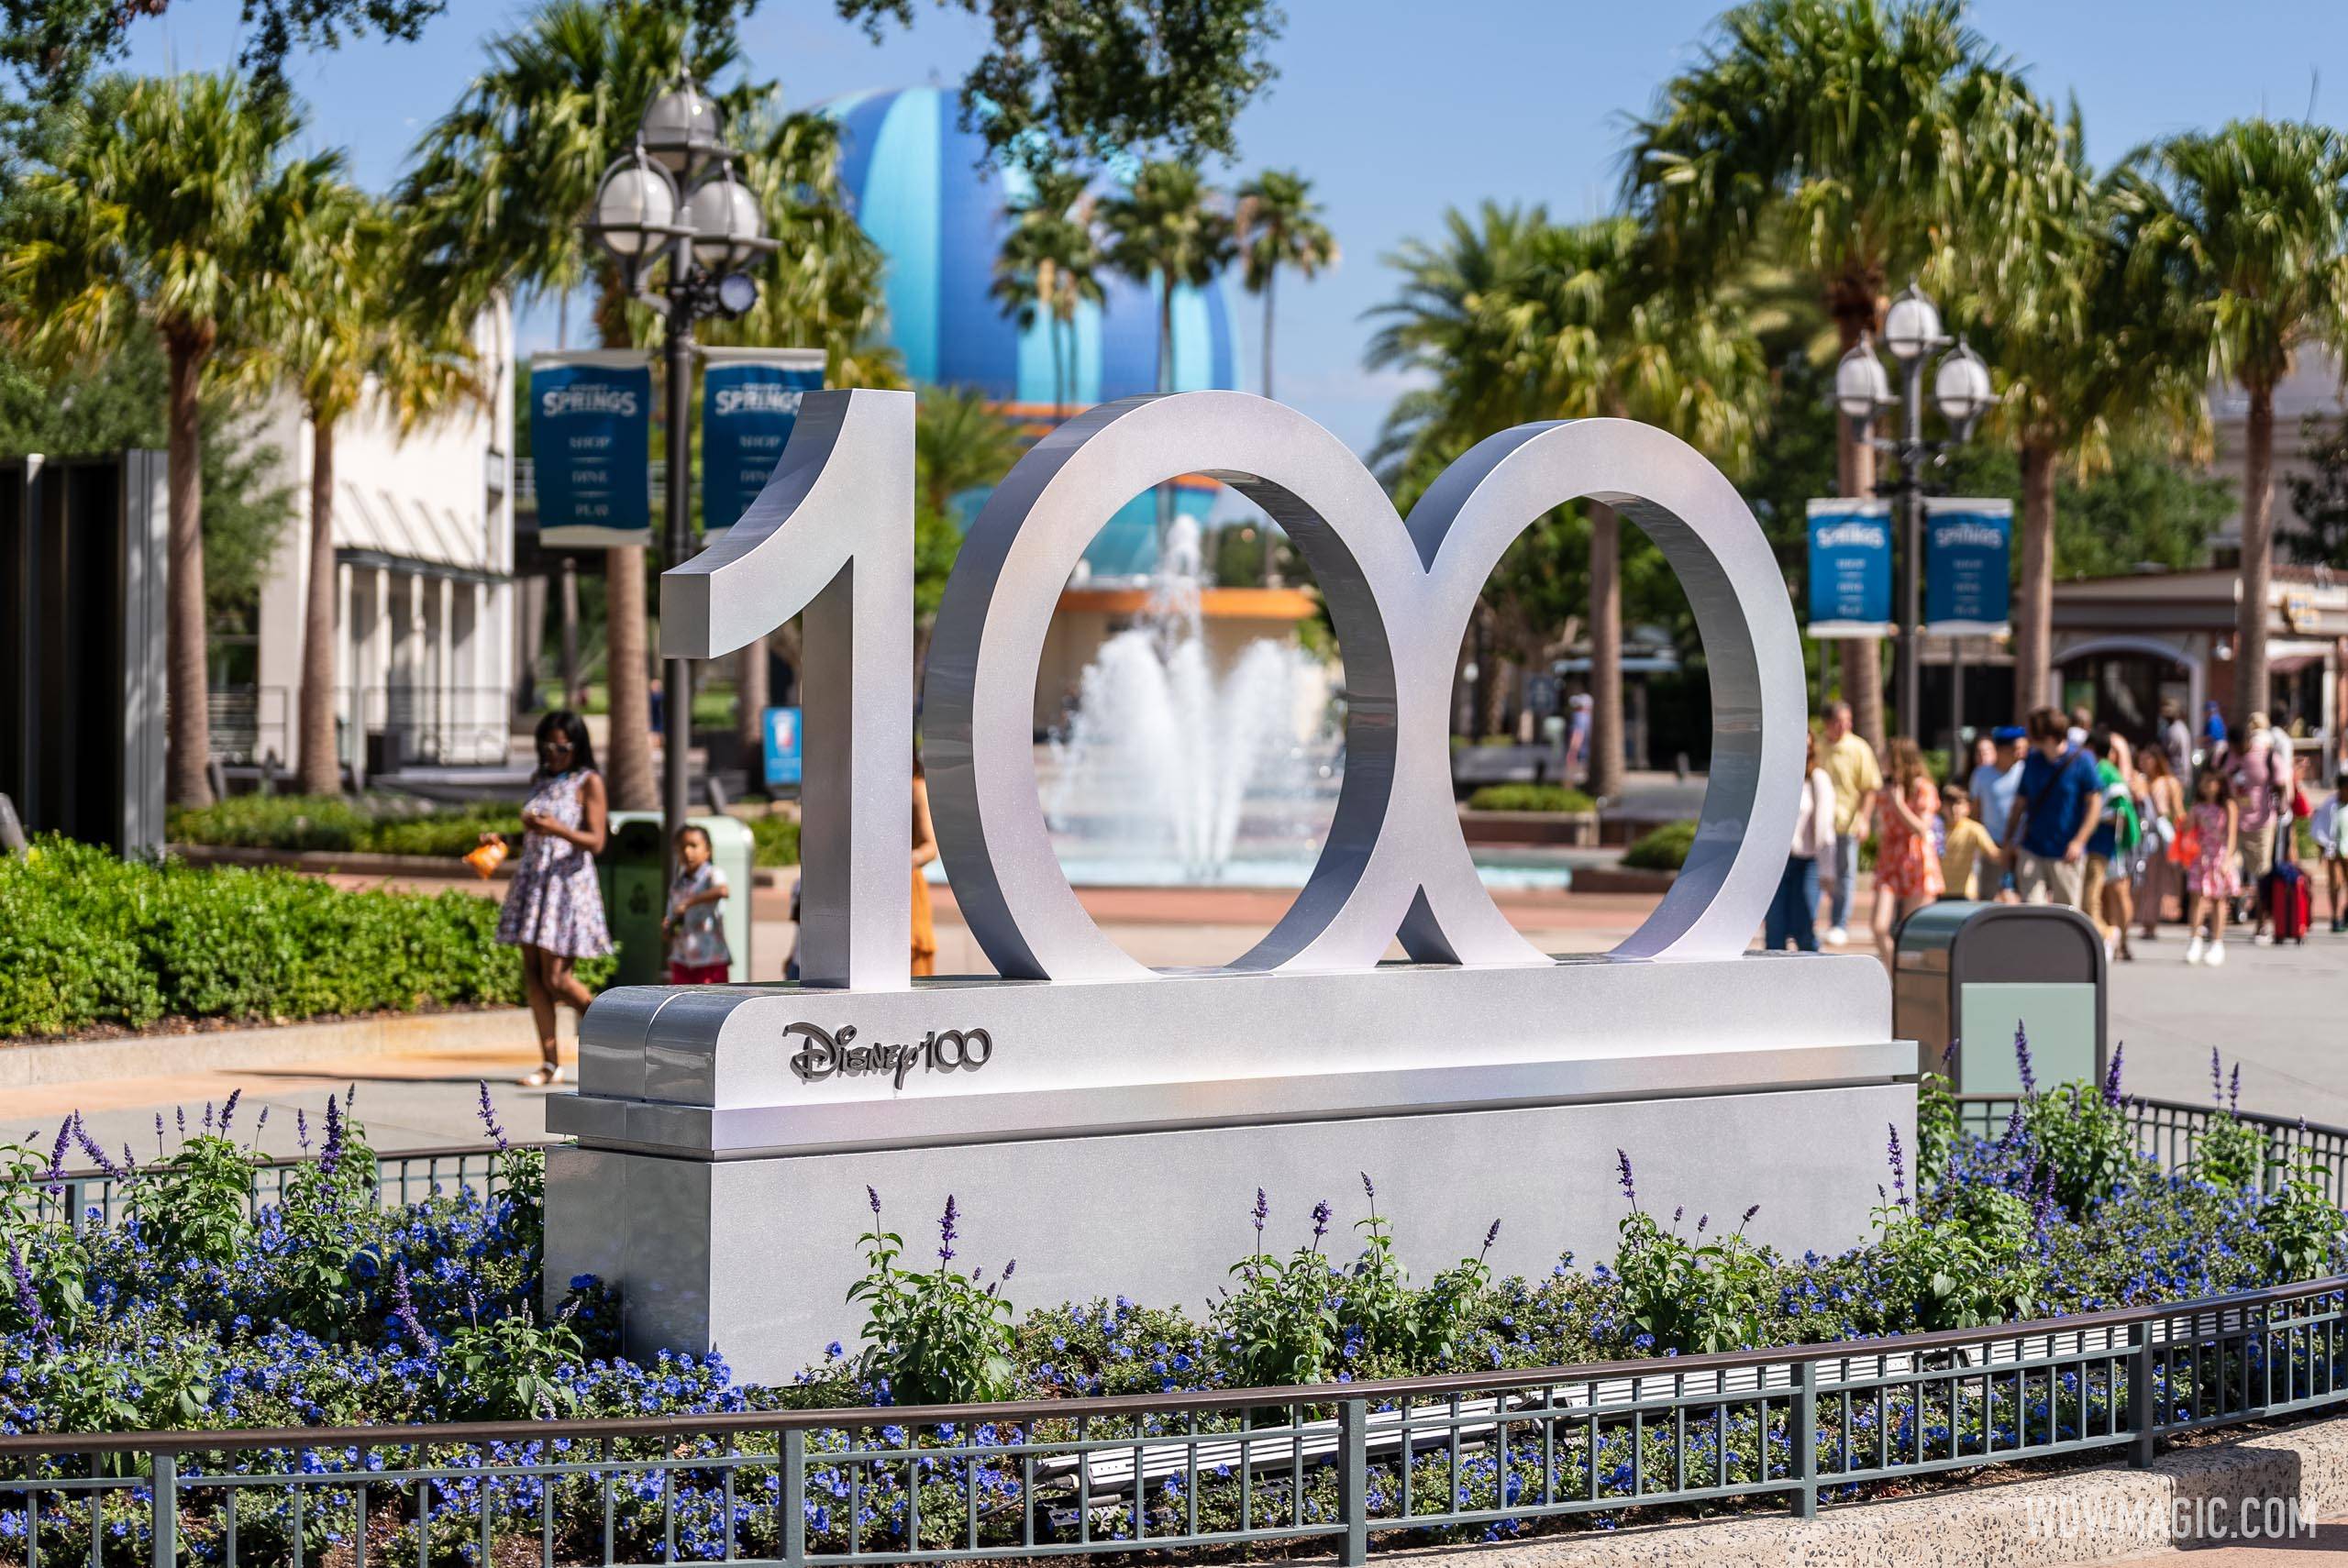 Platinum Disney100 photo op arrives at Disney Springs